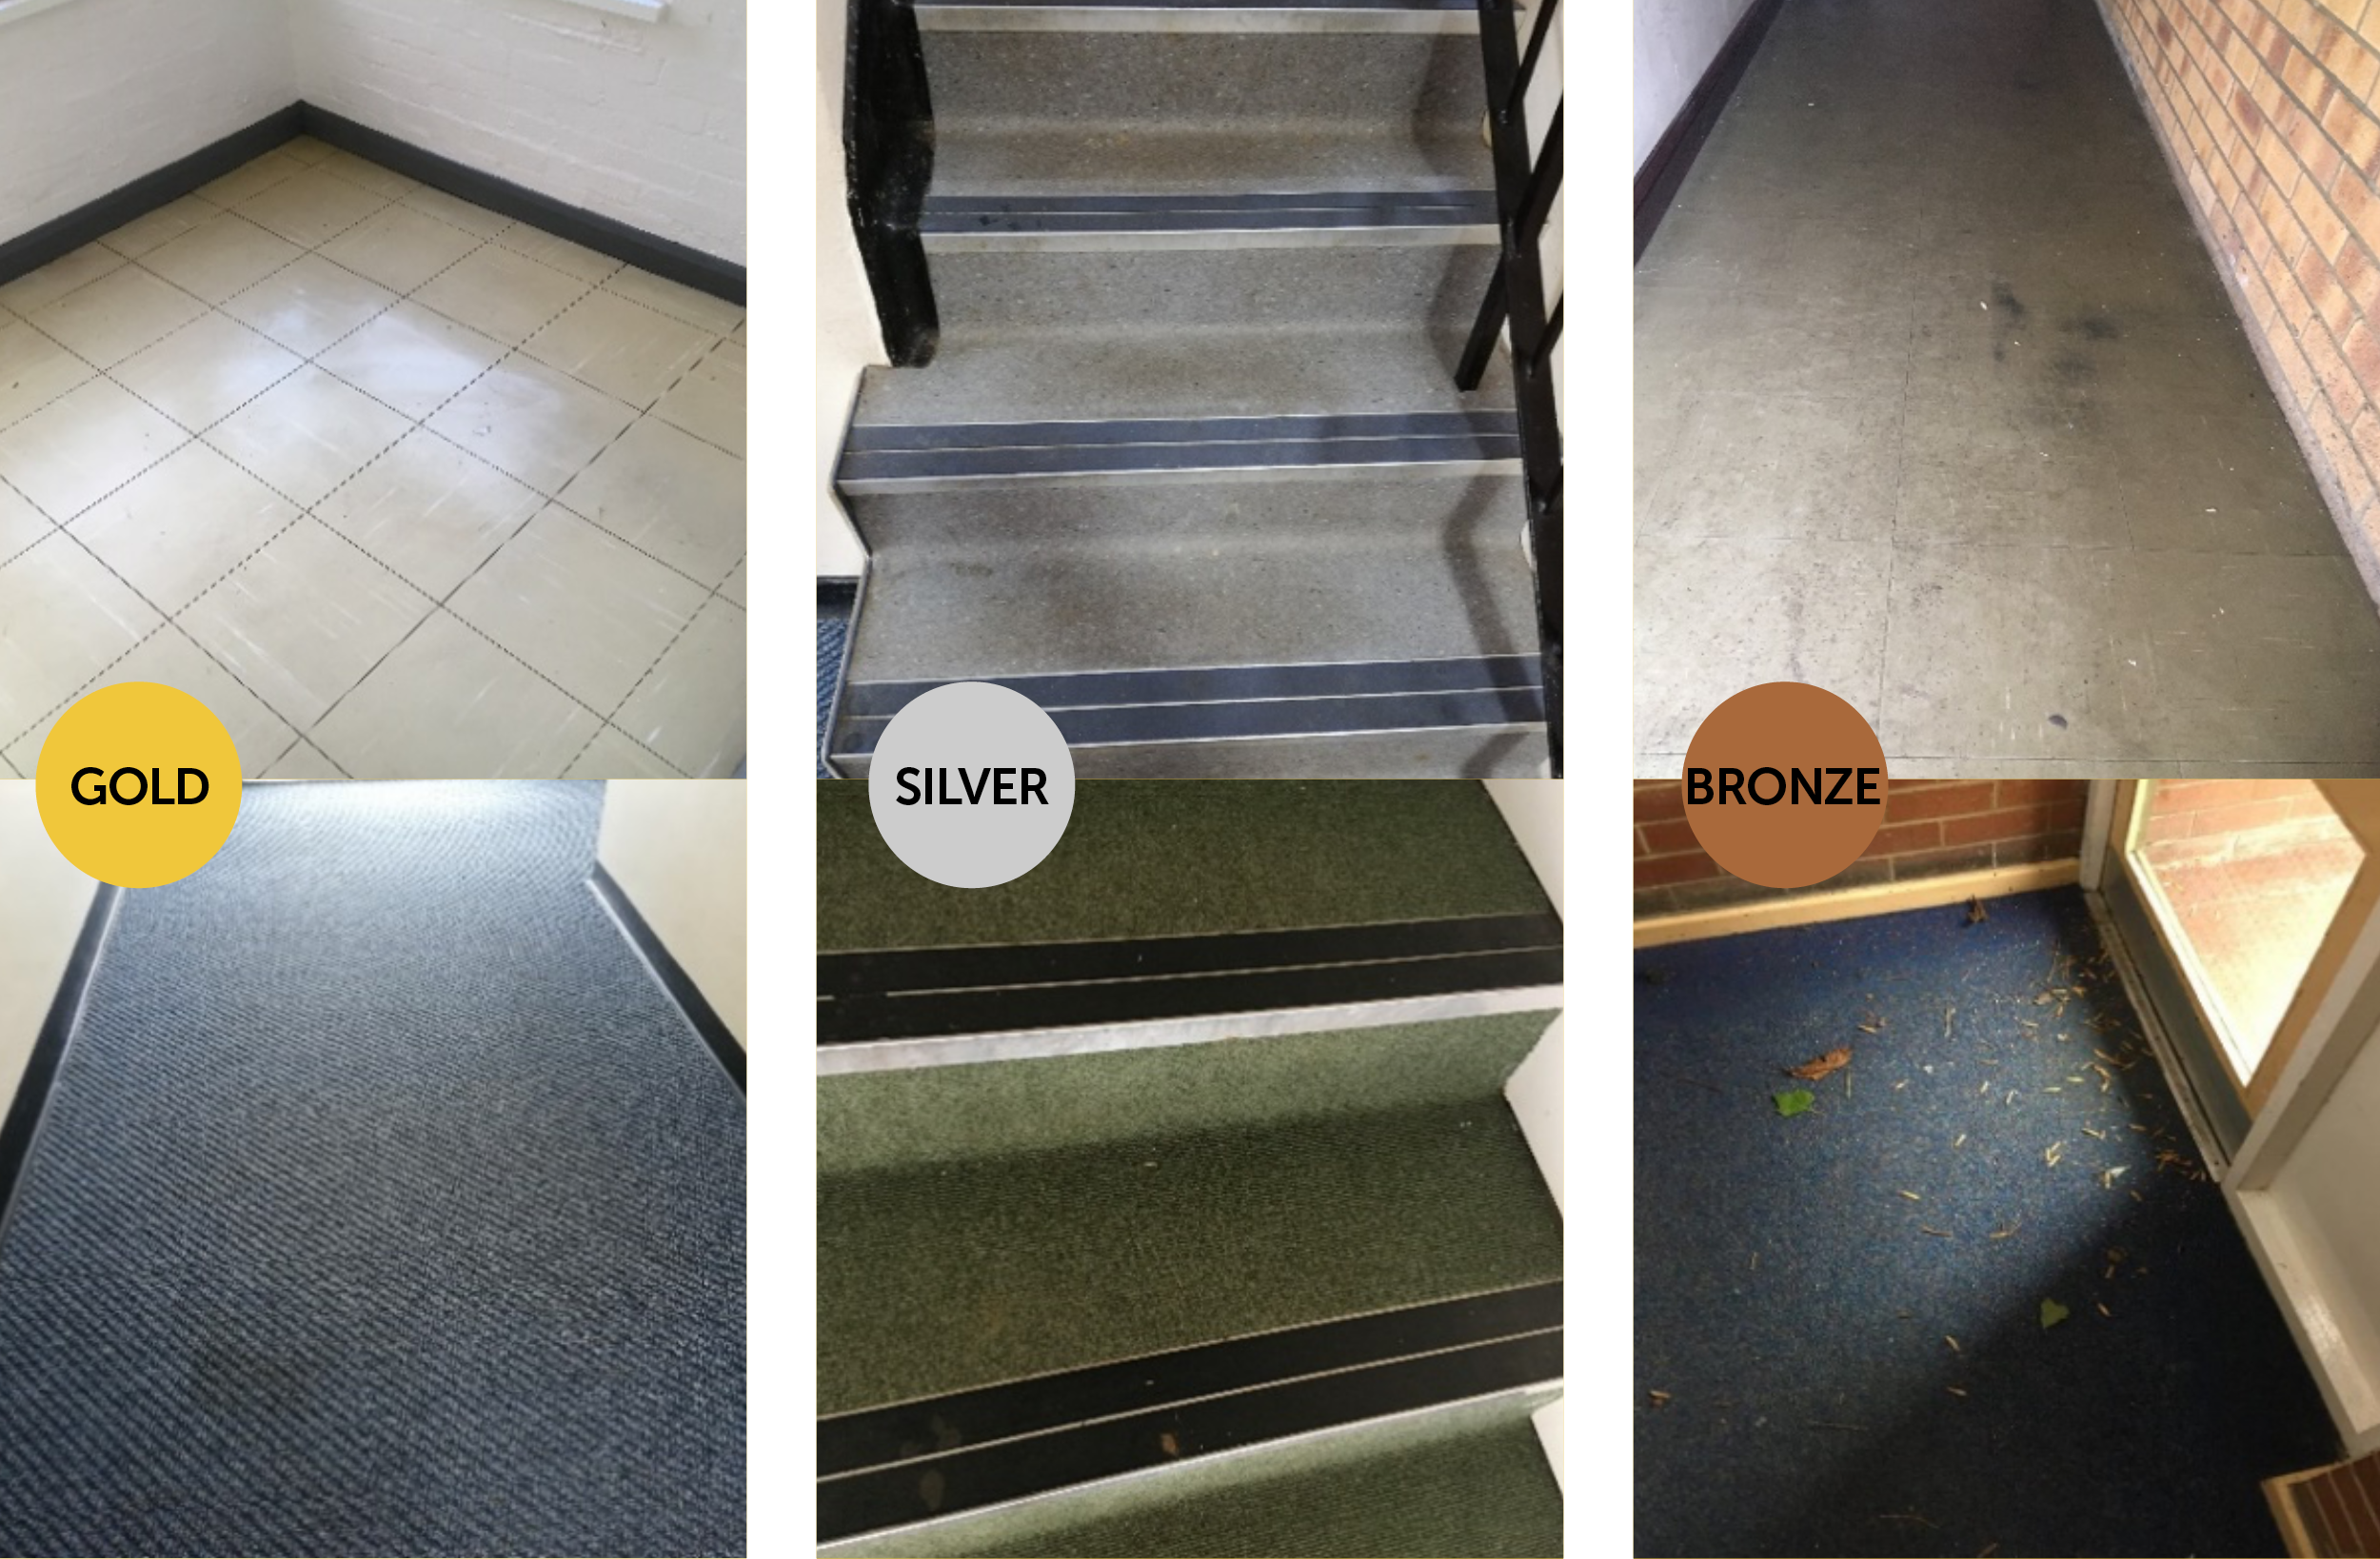 Flooring standards image guide